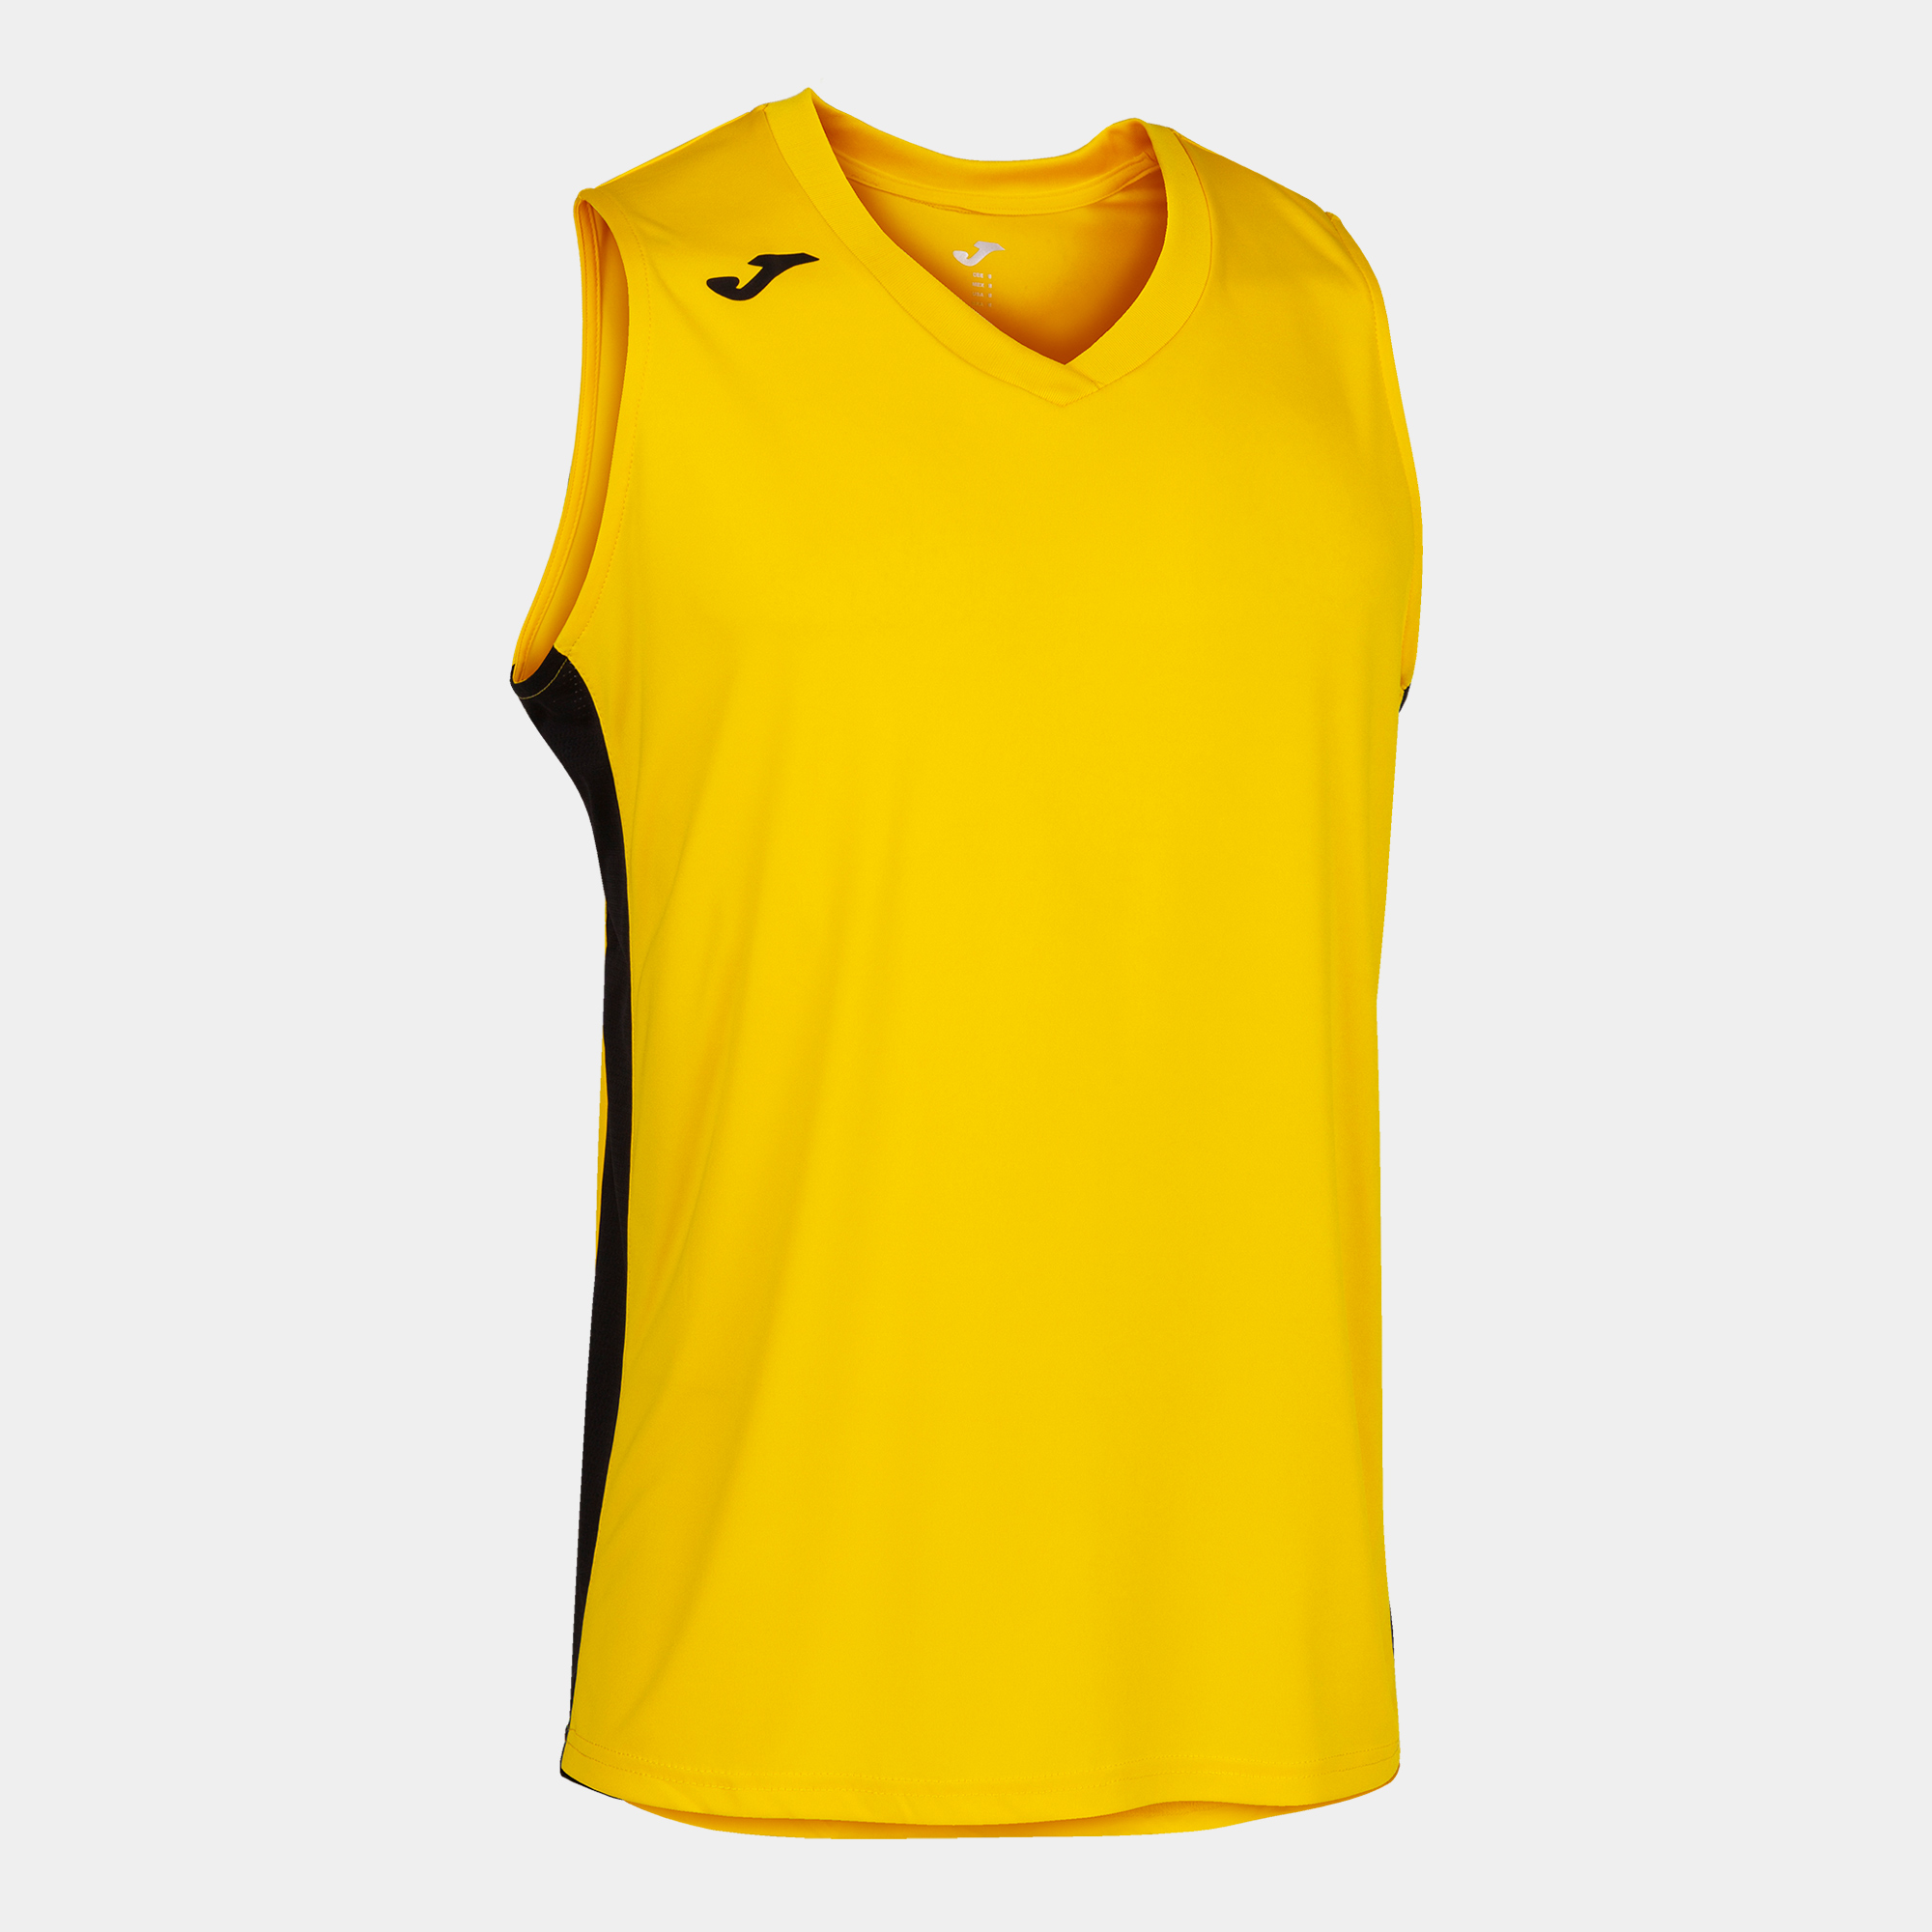 T-shirt De Alça Joma Cancha Iii Amarelo Preto - amarillo-negro - 